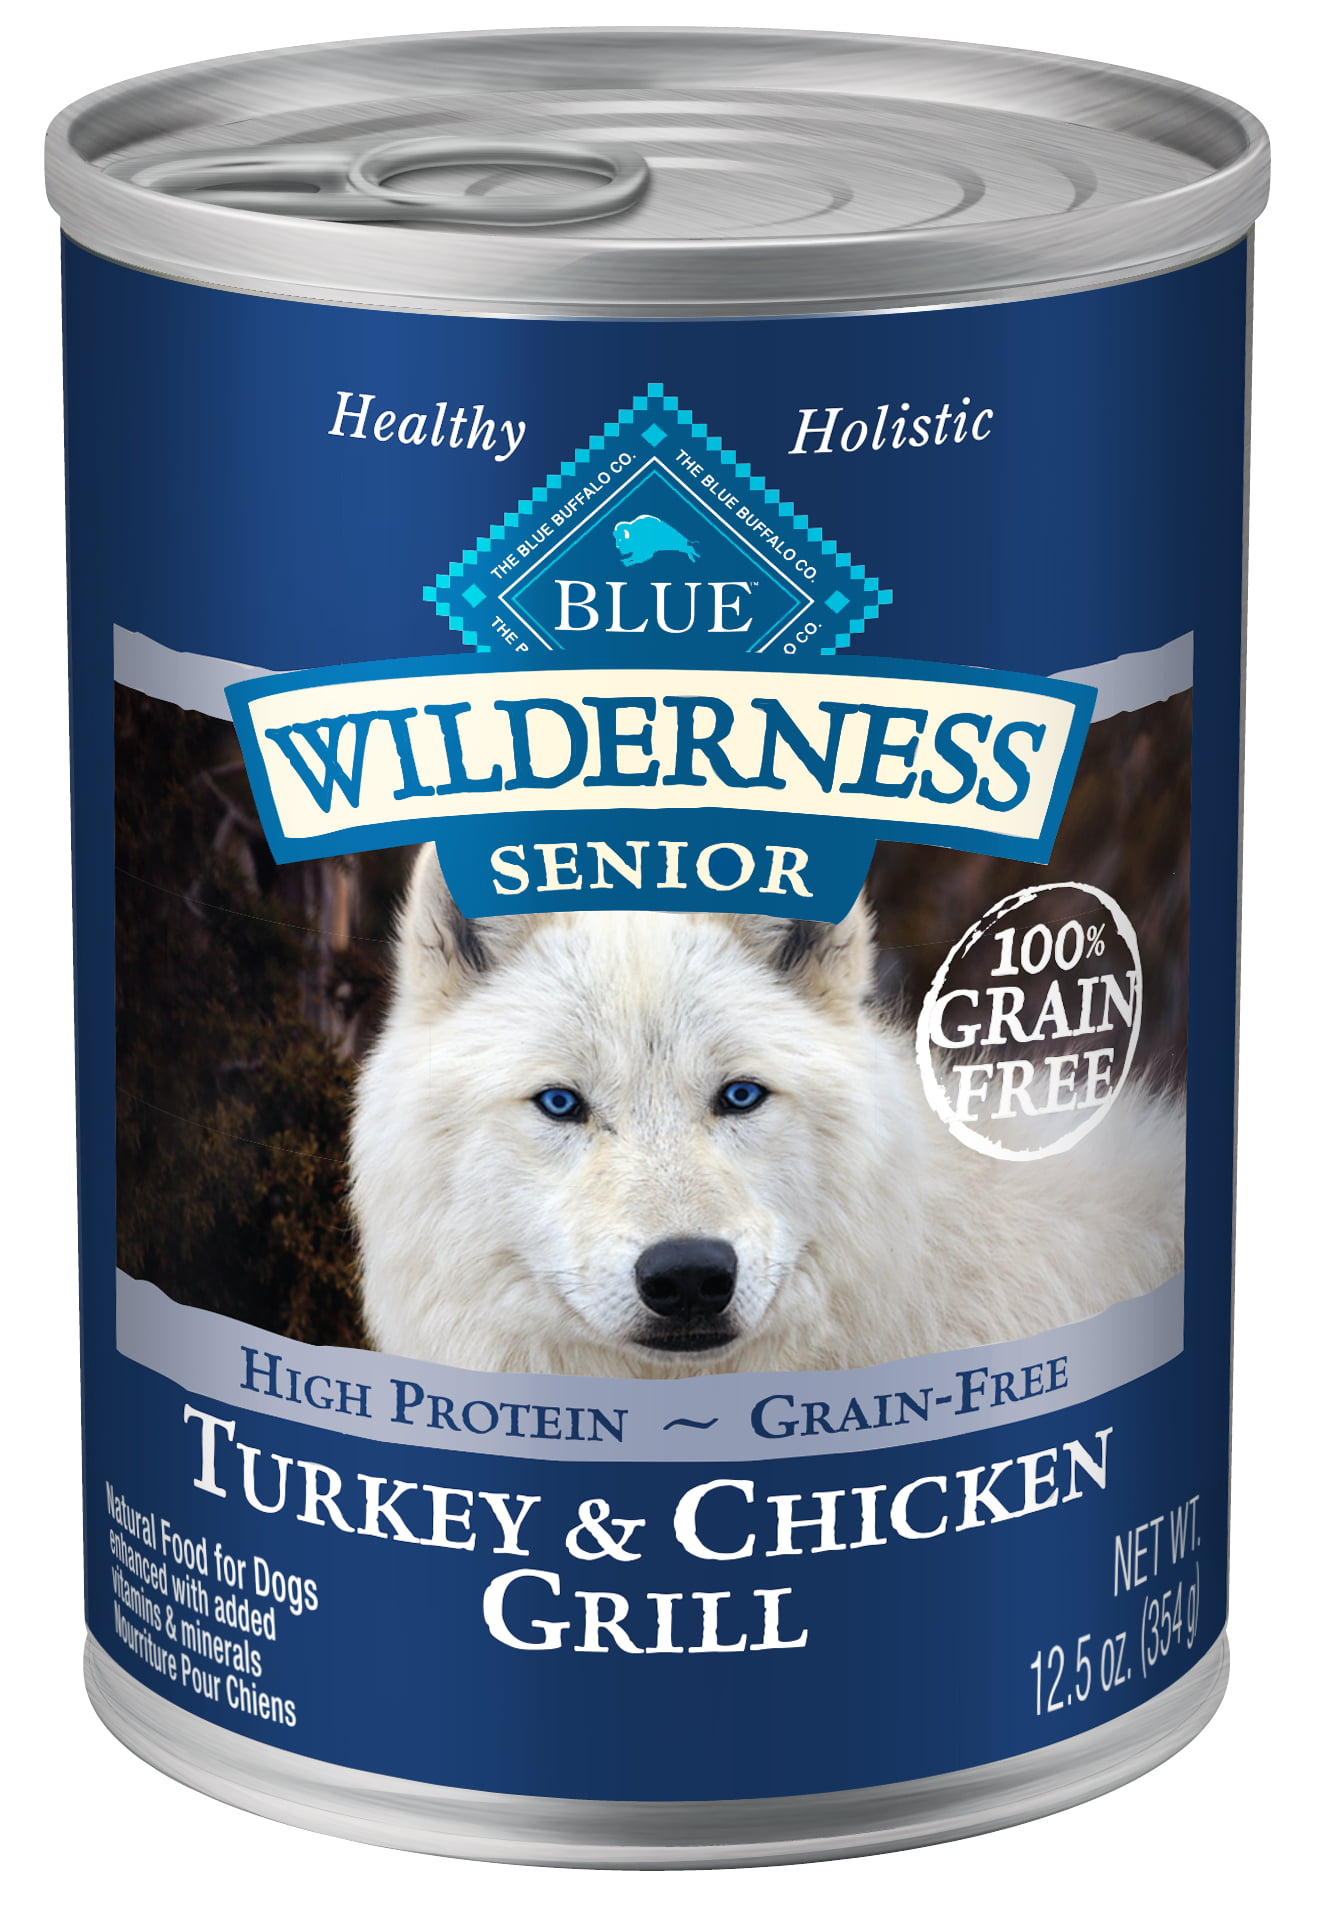 blue-buffalo-wilderness-high-protein-grain-free-natural-senior-wet-dog